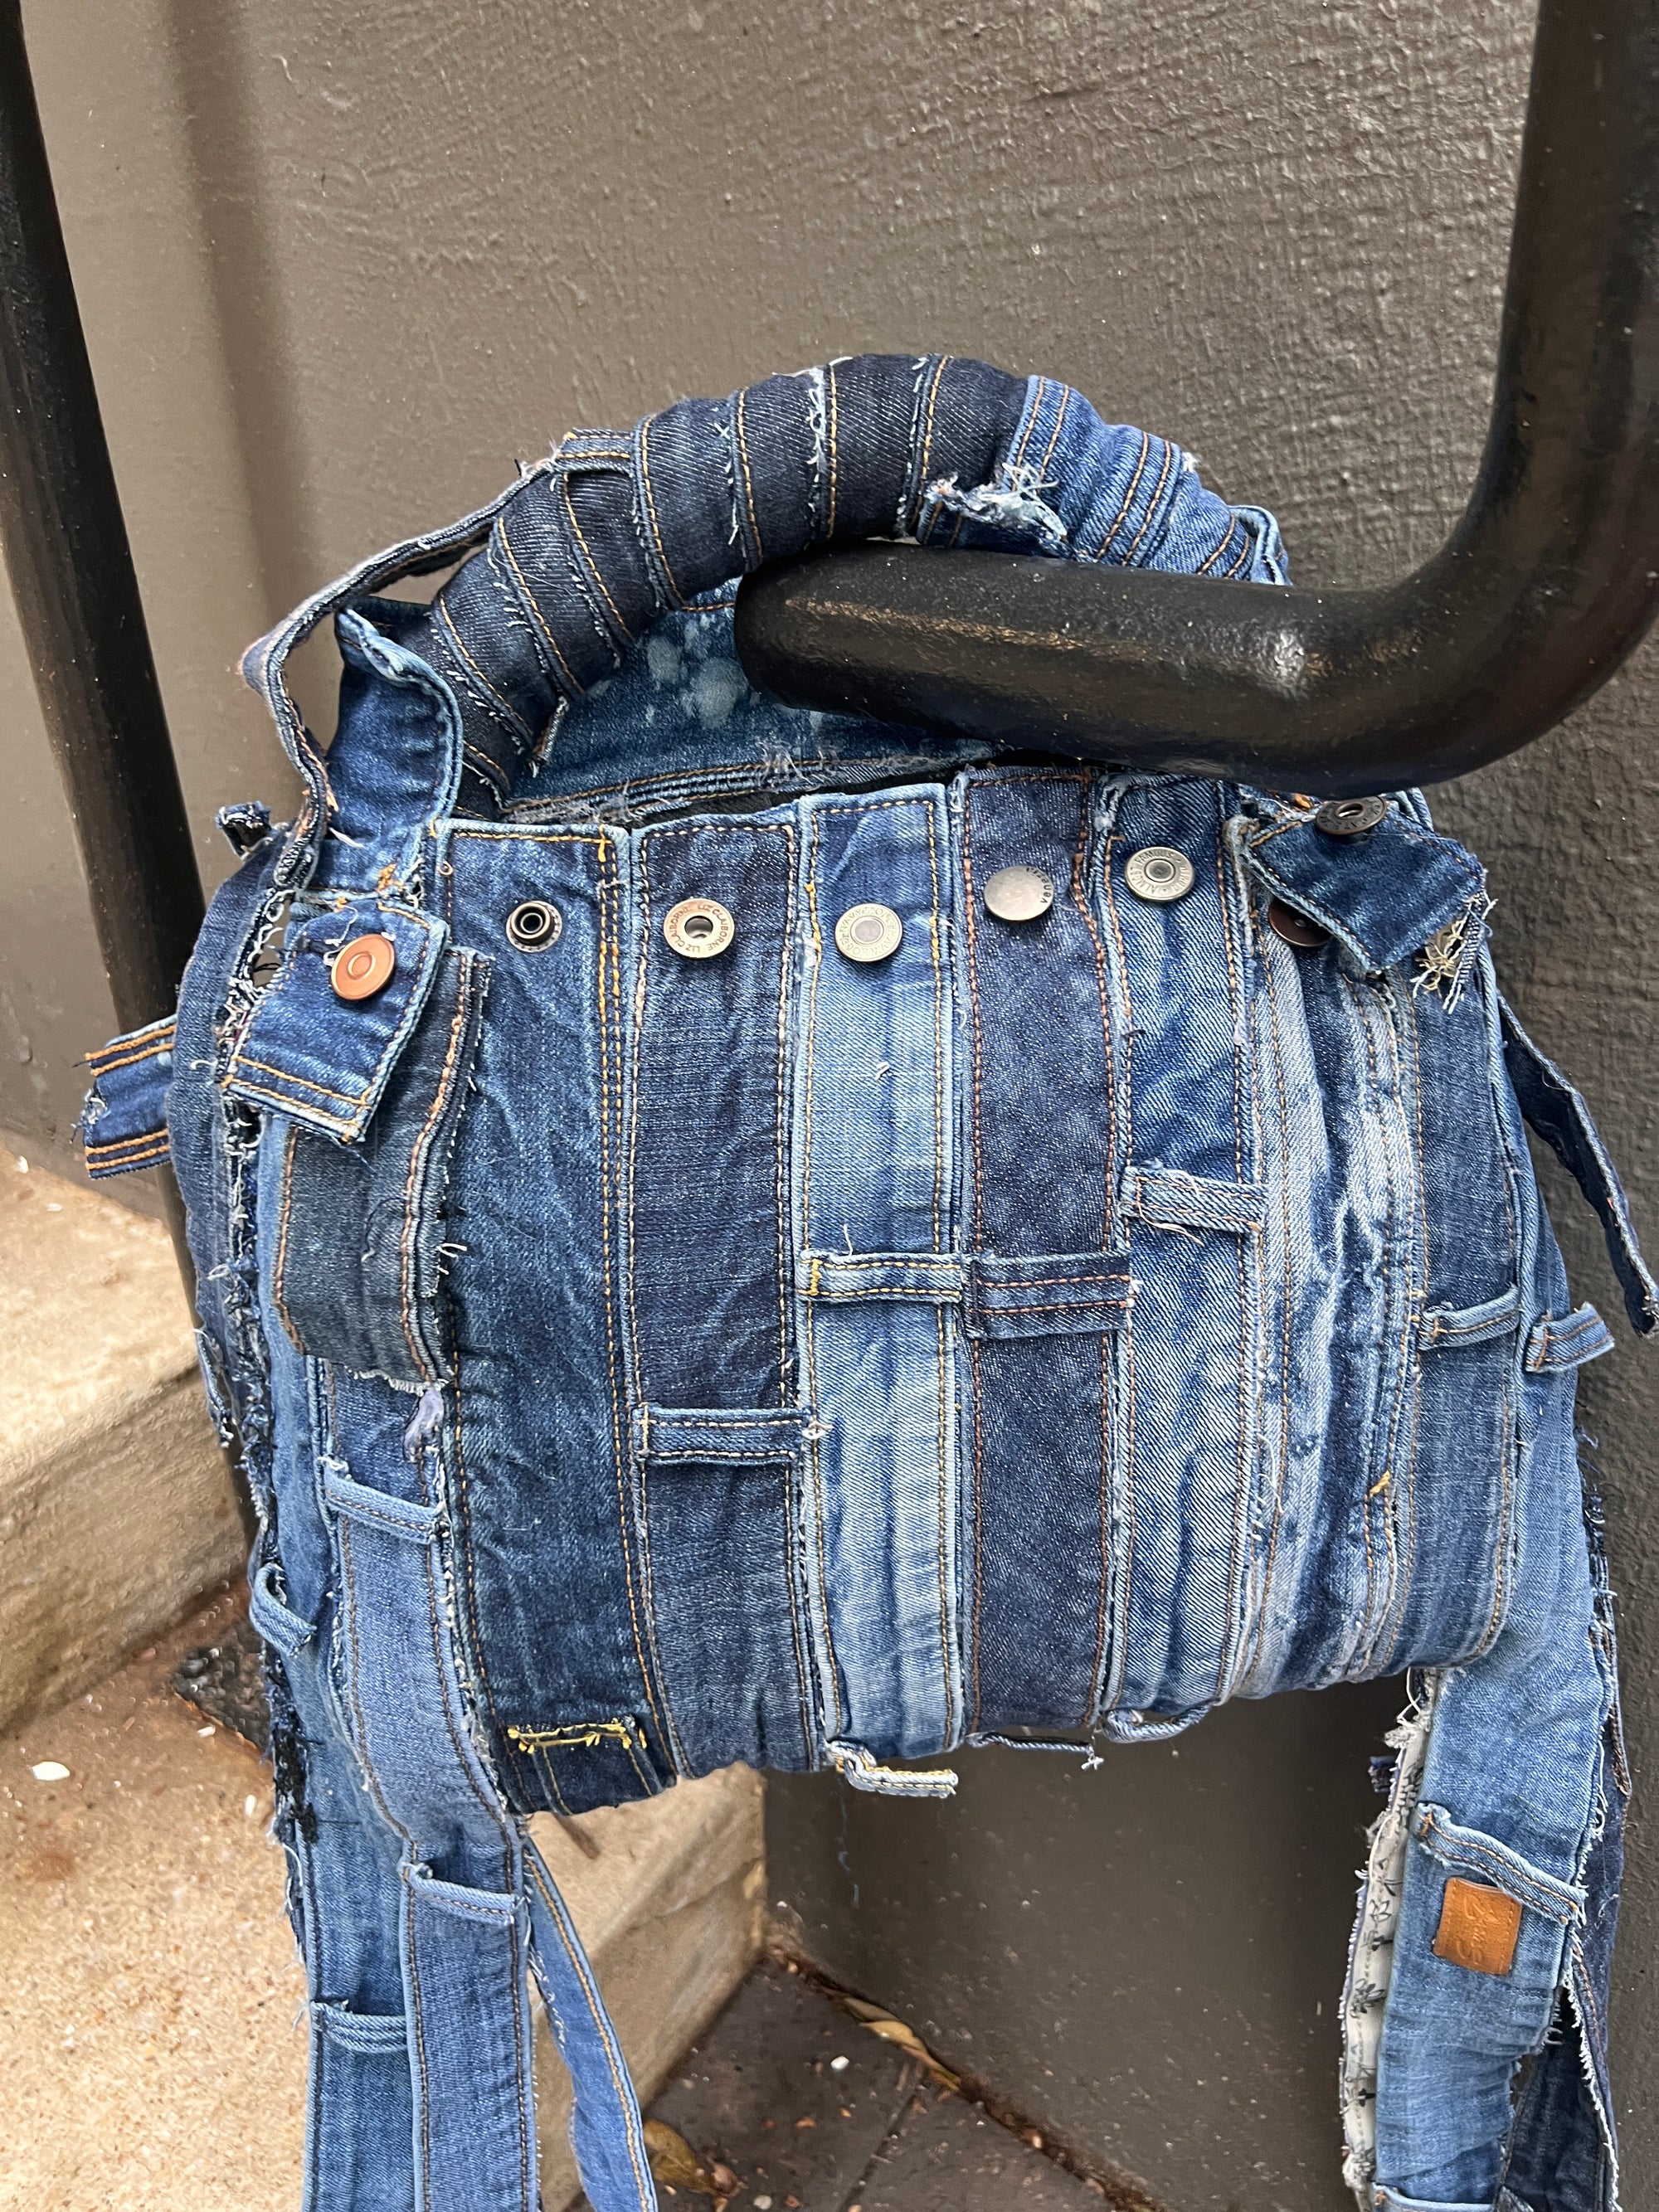 Ugly Belt Loop Denim Bag : Odd Style